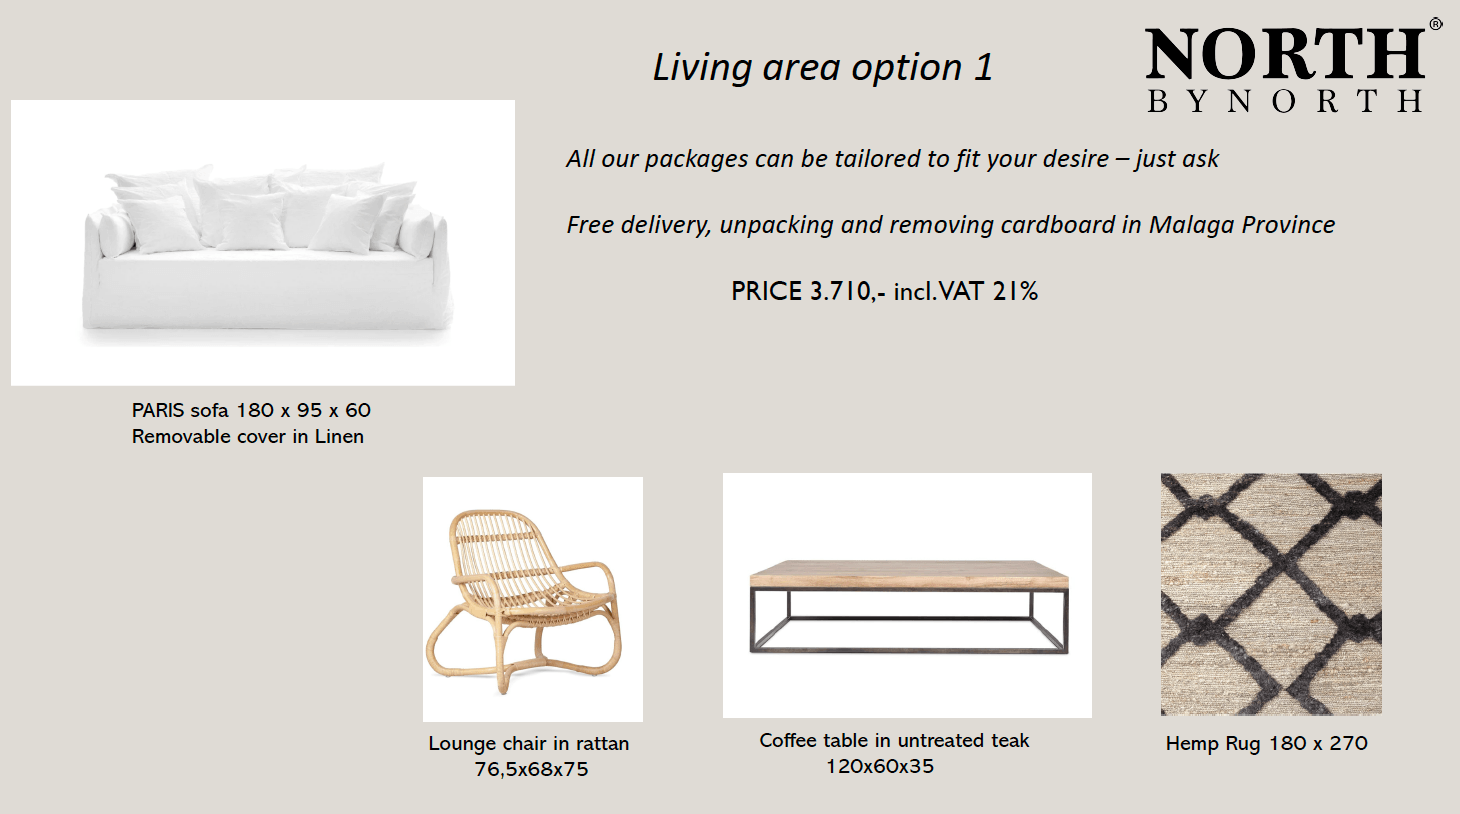 Living area option 1